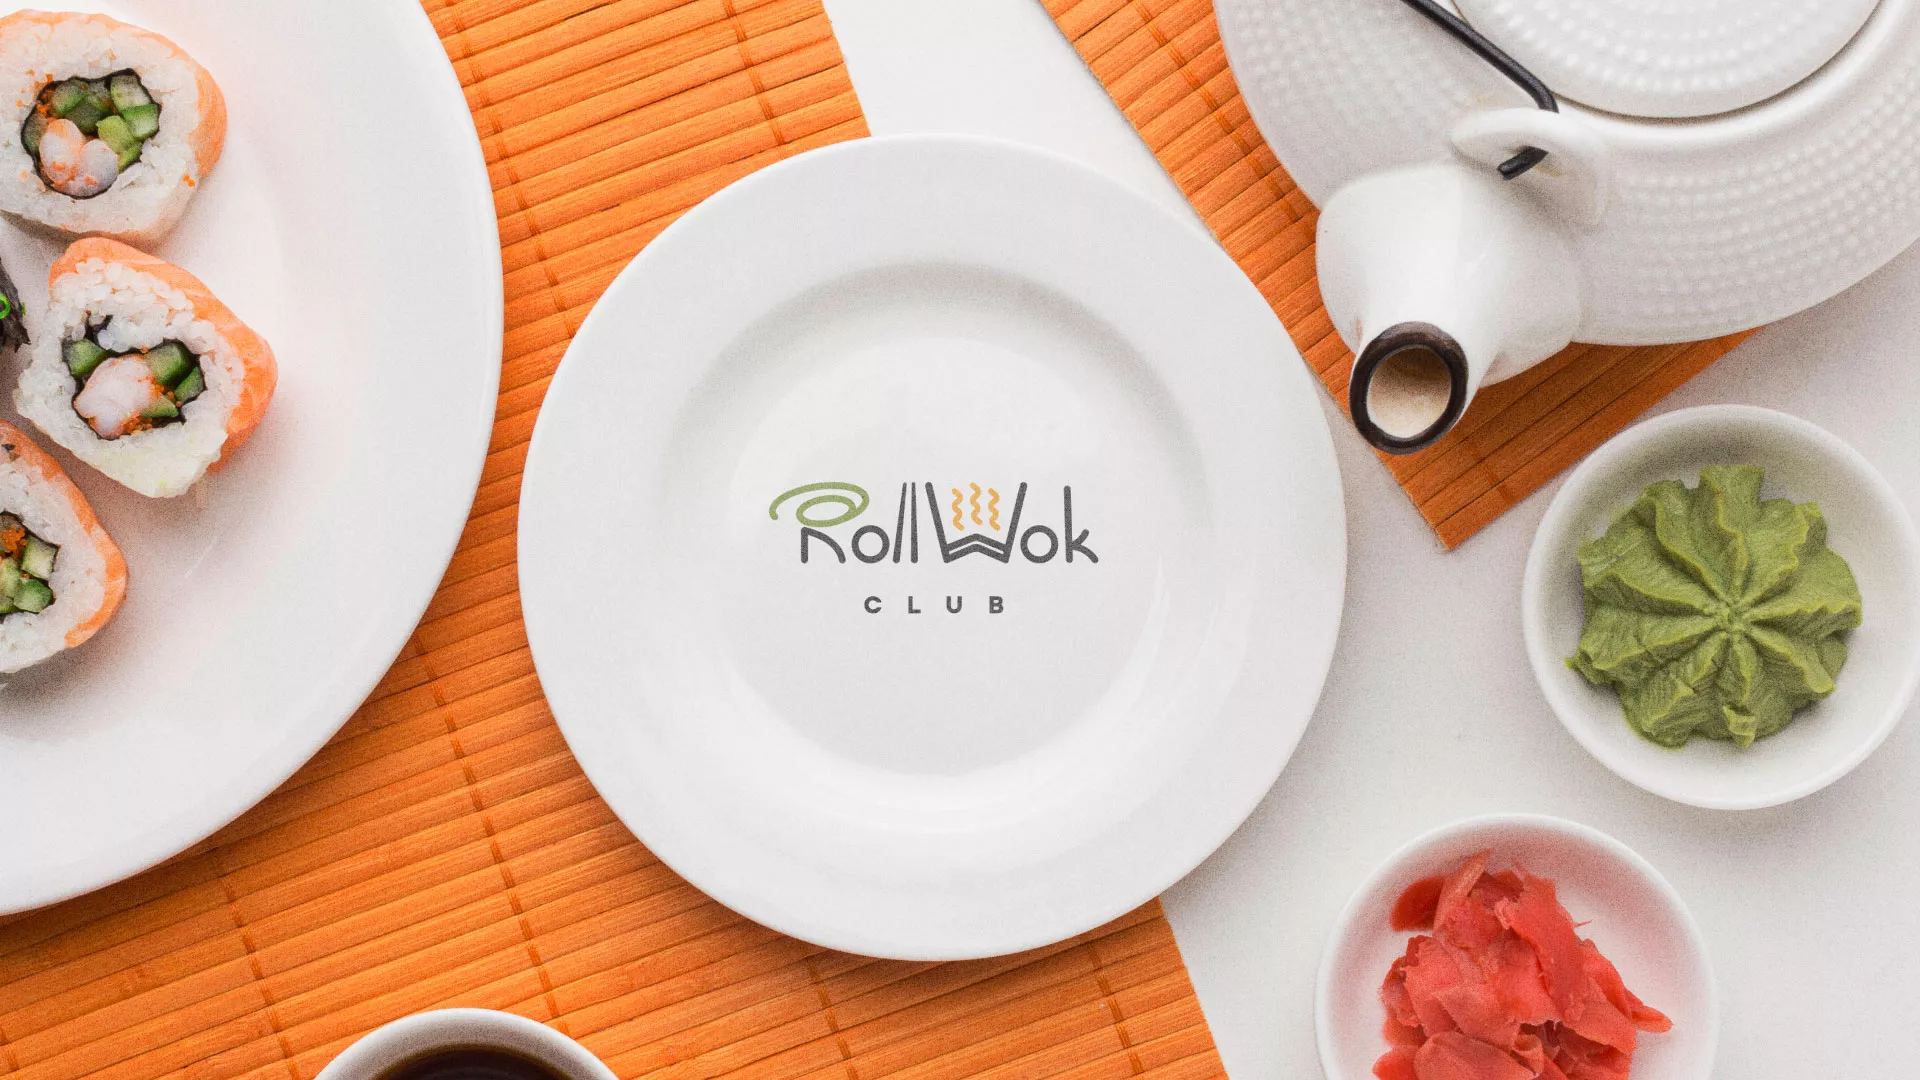 Разработка логотипа и фирменного стиля суши-бара «Roll Wok Club» в Донецке